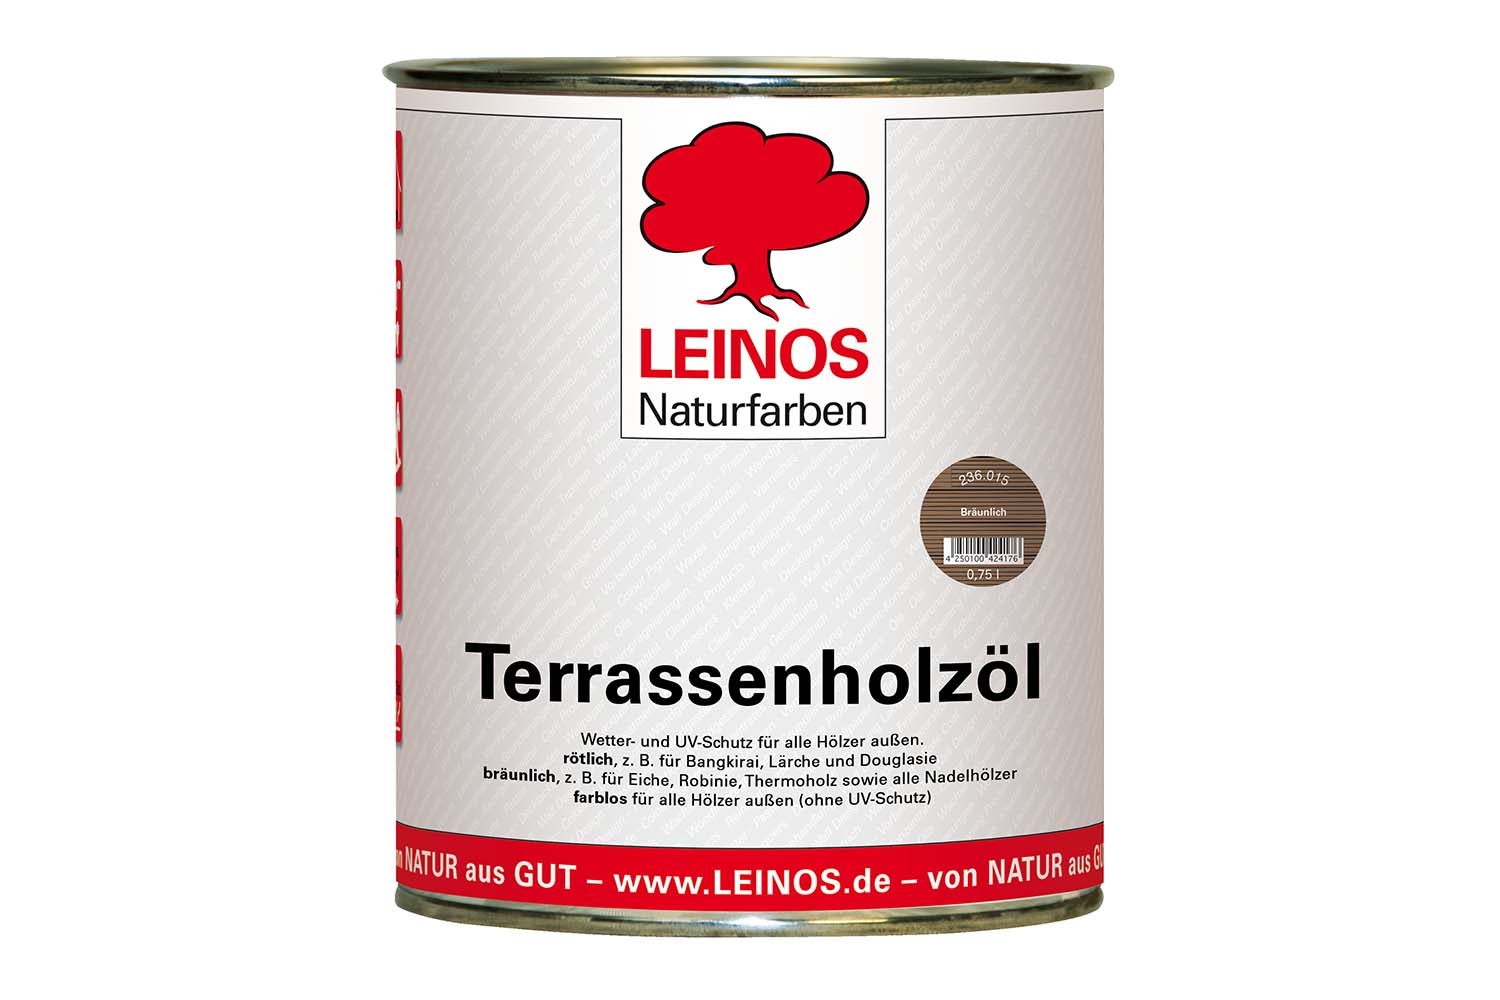 Leinos Terrassenholzöl 236 Bräunlich